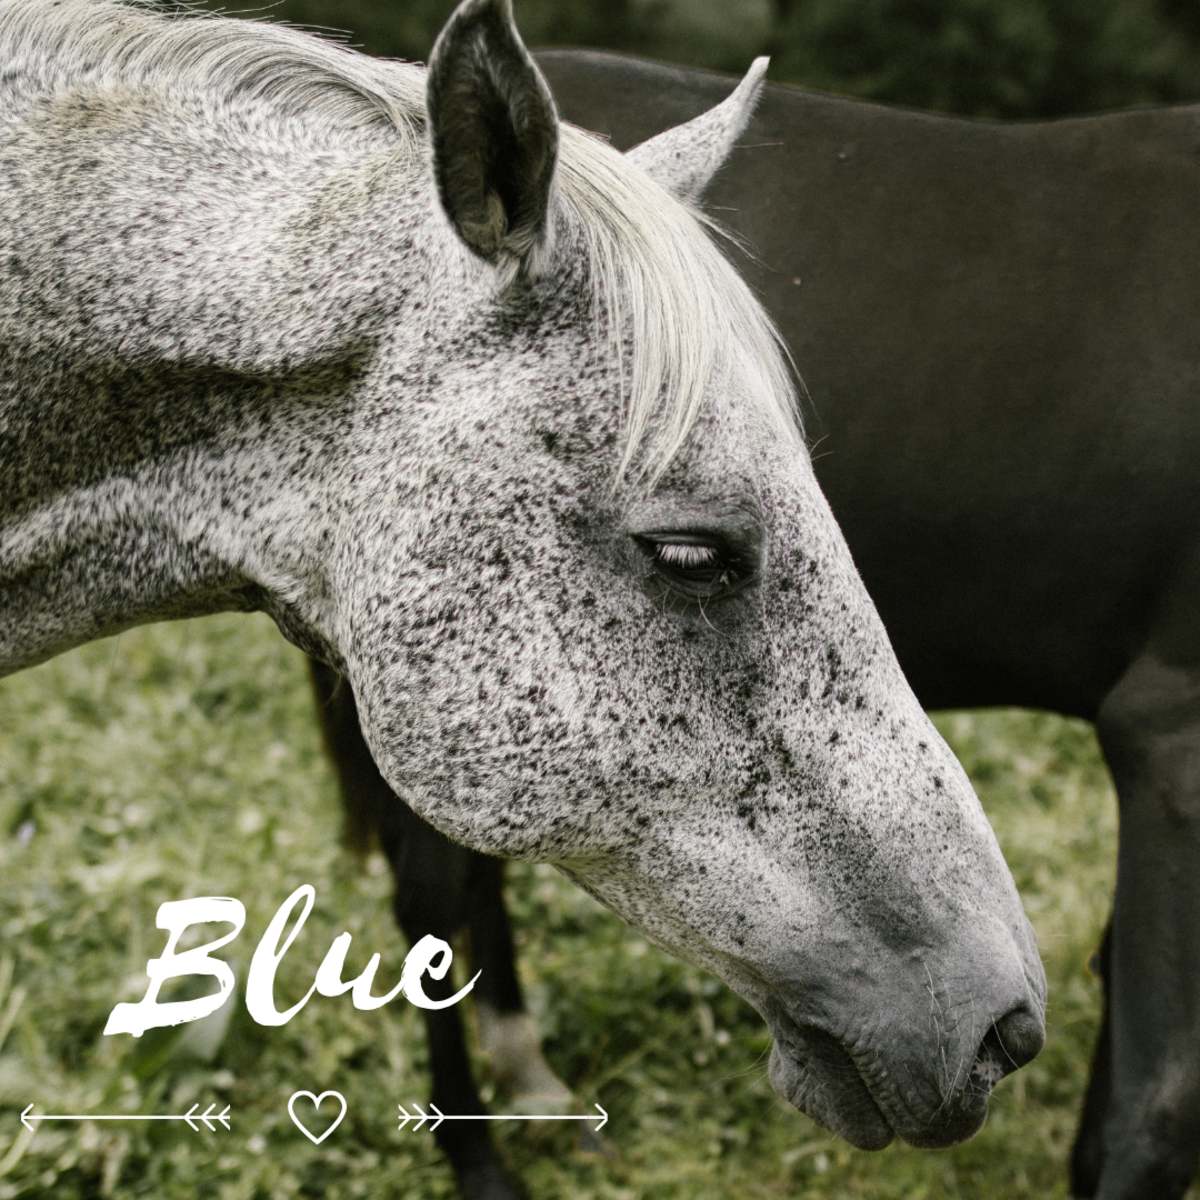 Blue is a cute horse name.